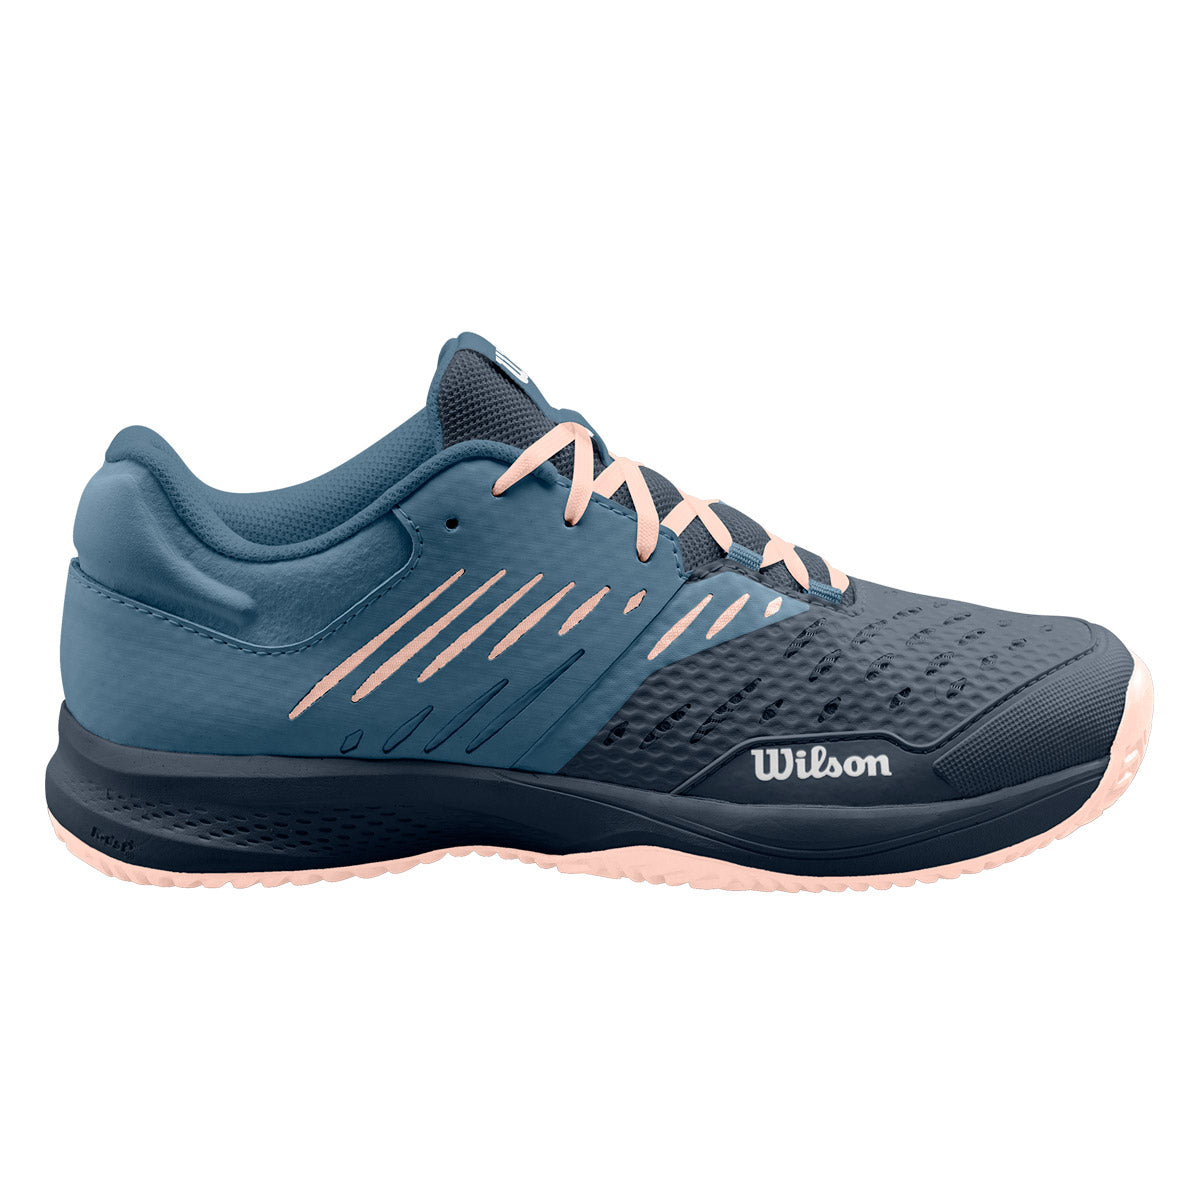 WILSON KAOS COMP 3.0 W 网球鞋 WRS328800 